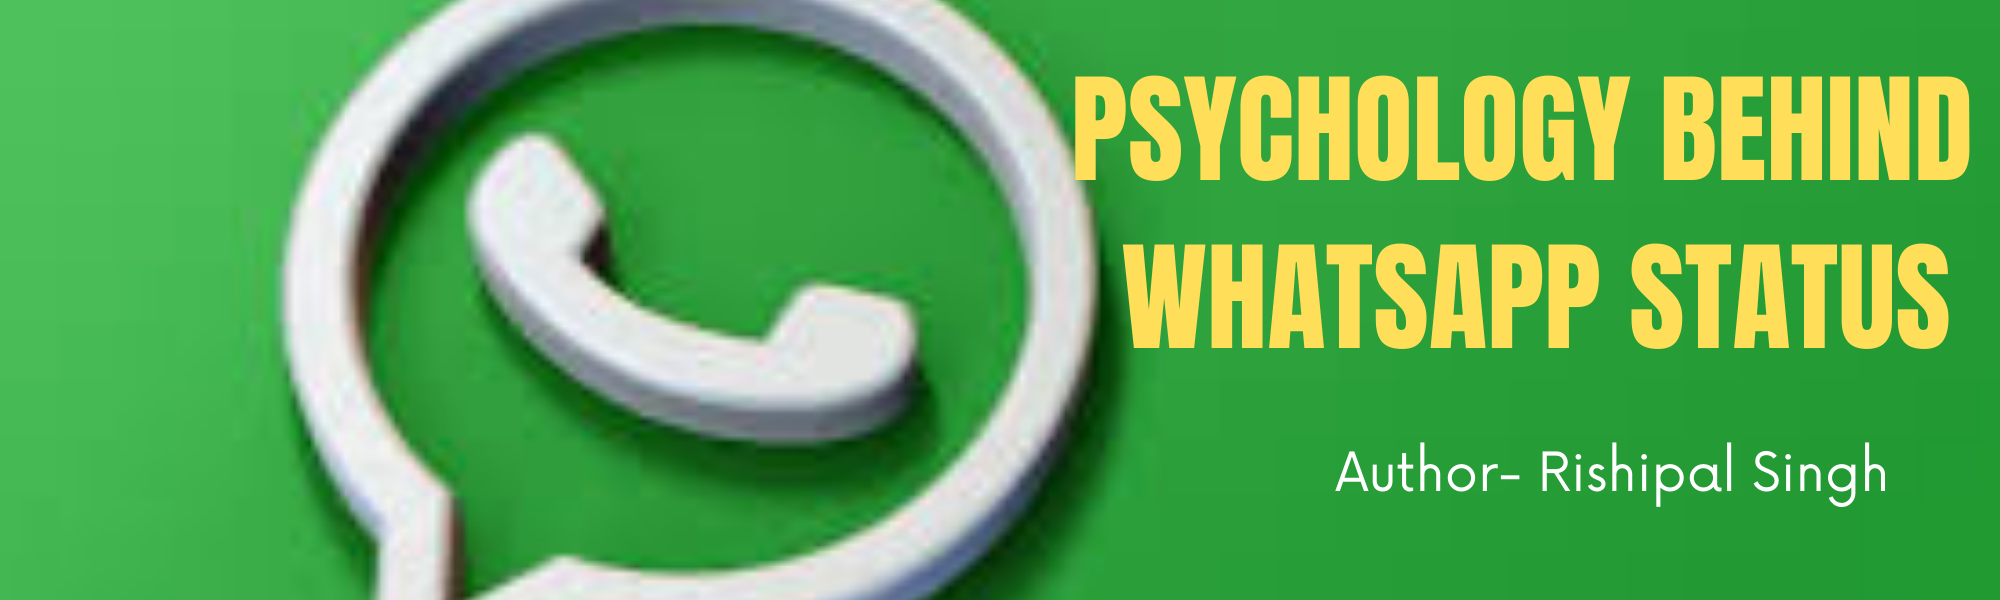 Psychology Behind Whatsapp Status